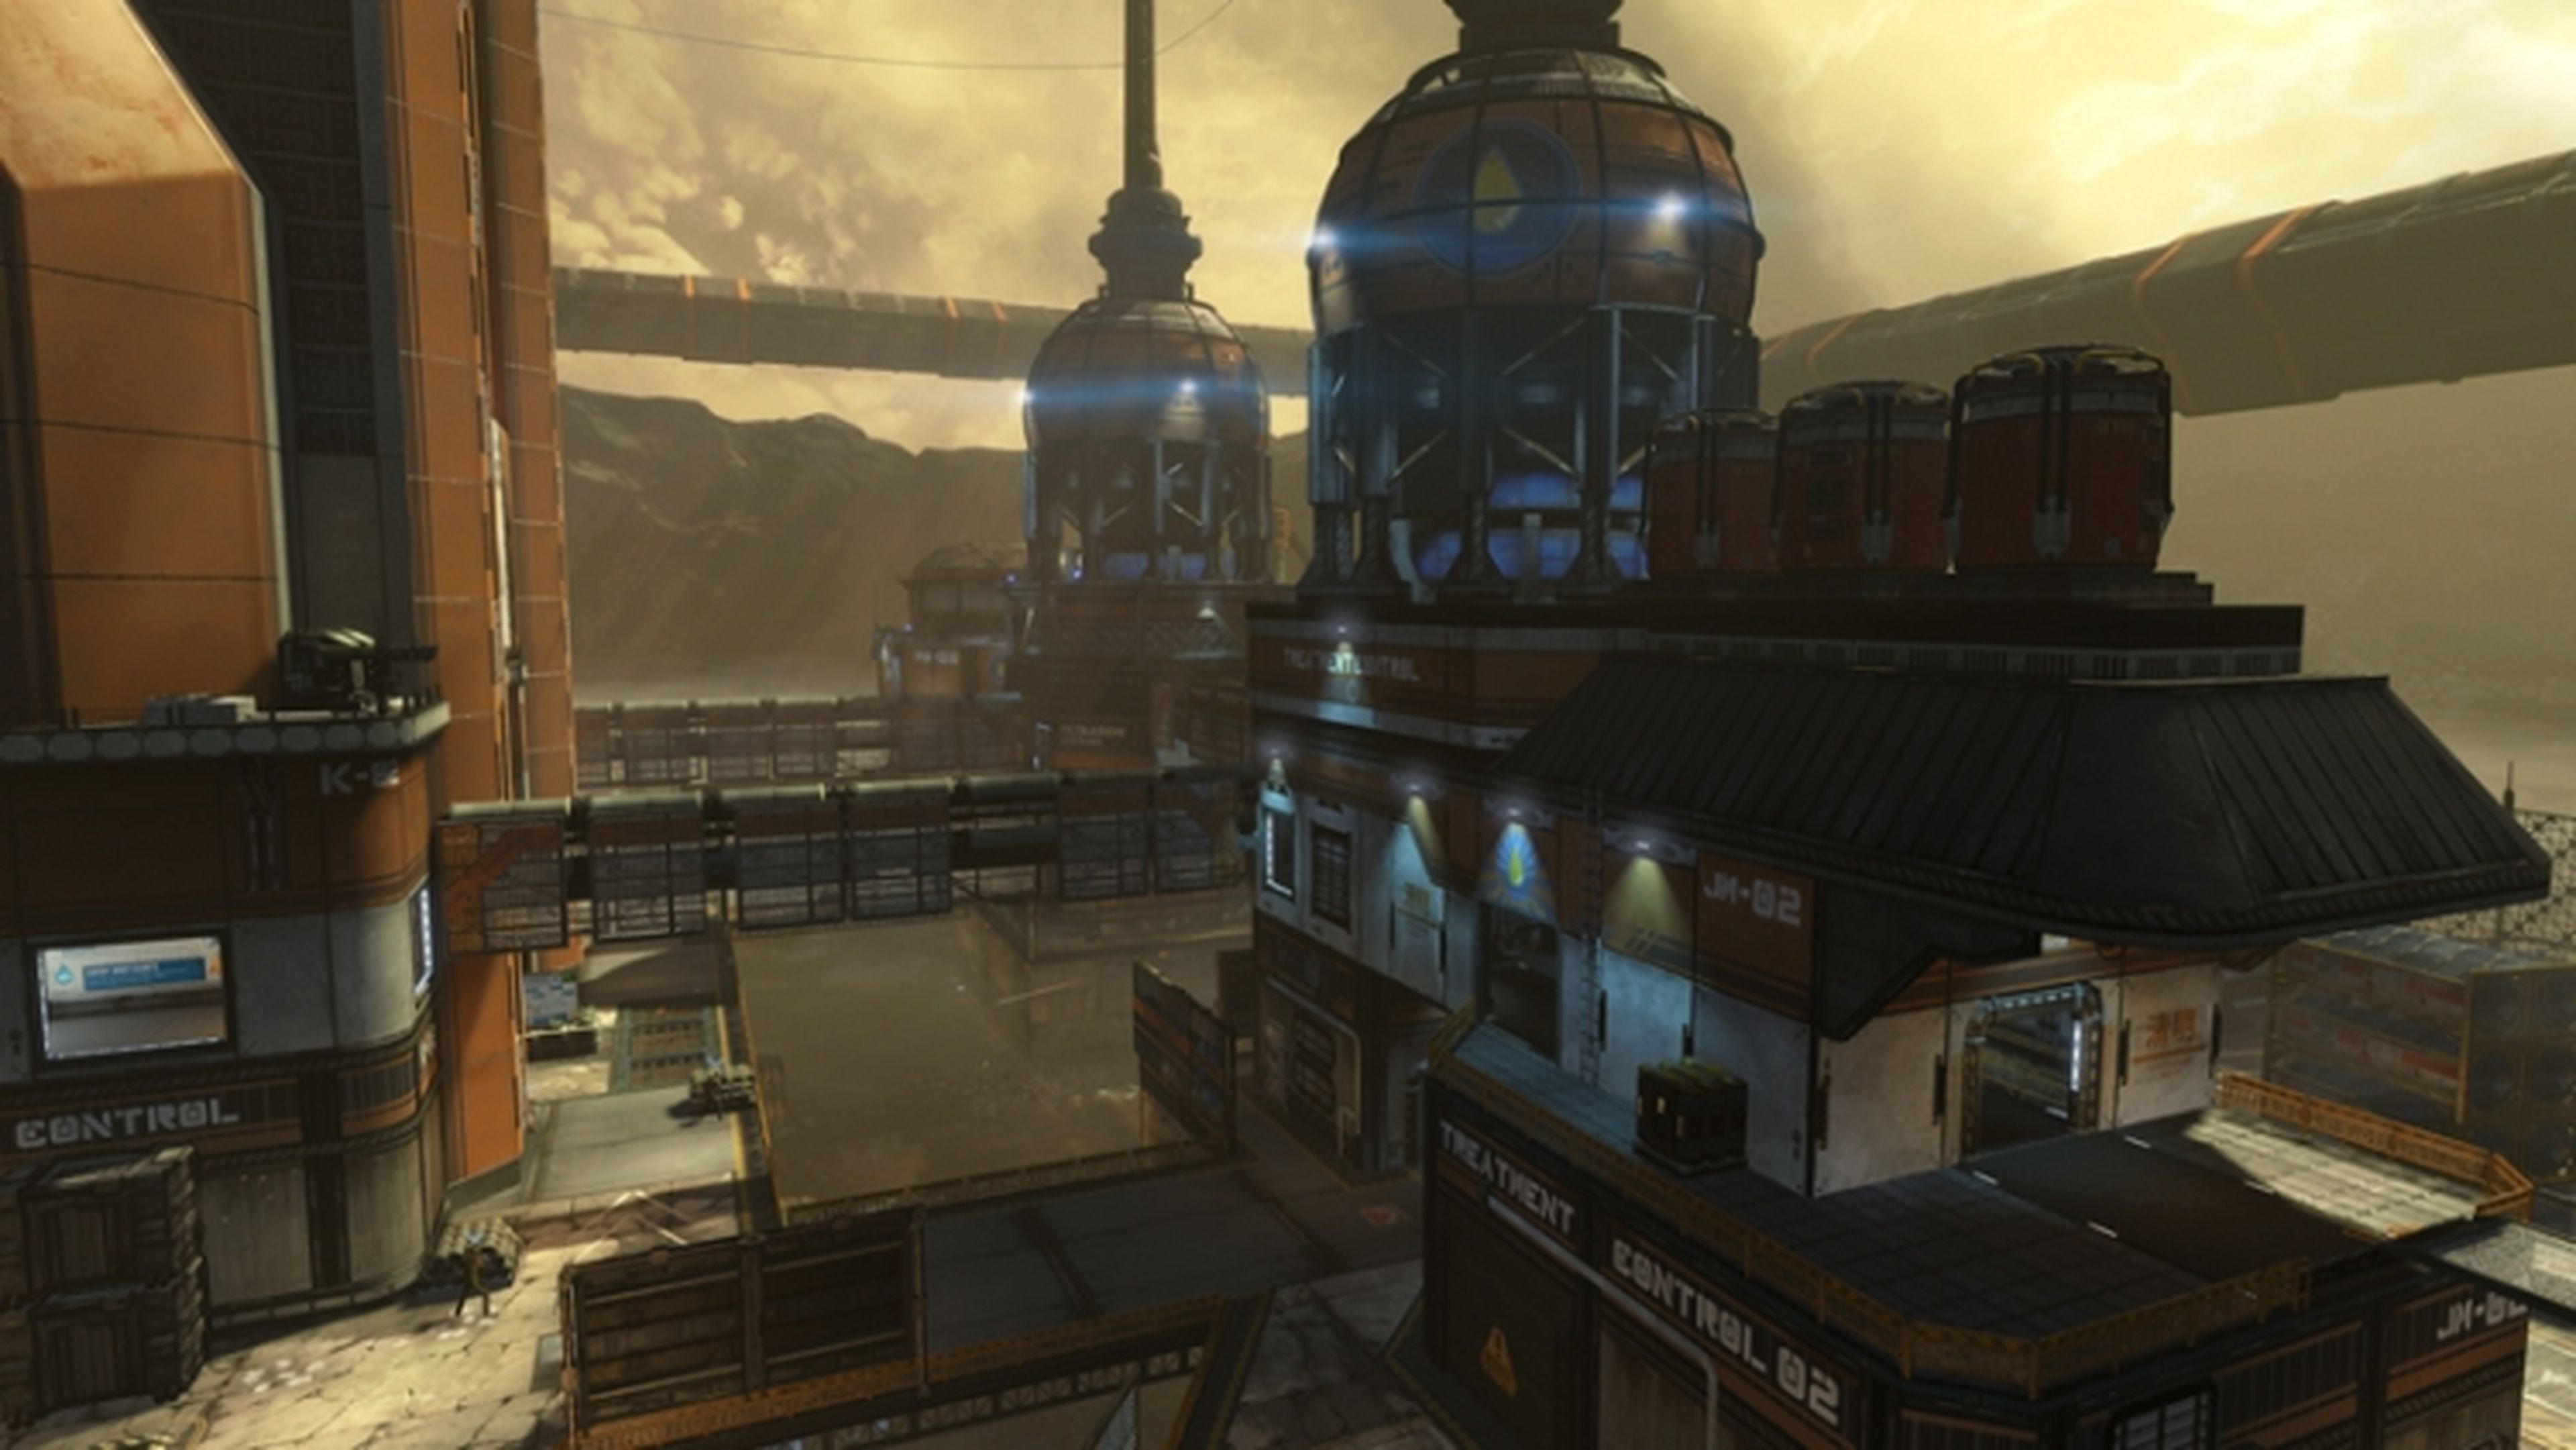 Imágenes de Runoff, mapa del DLC de Titanfall